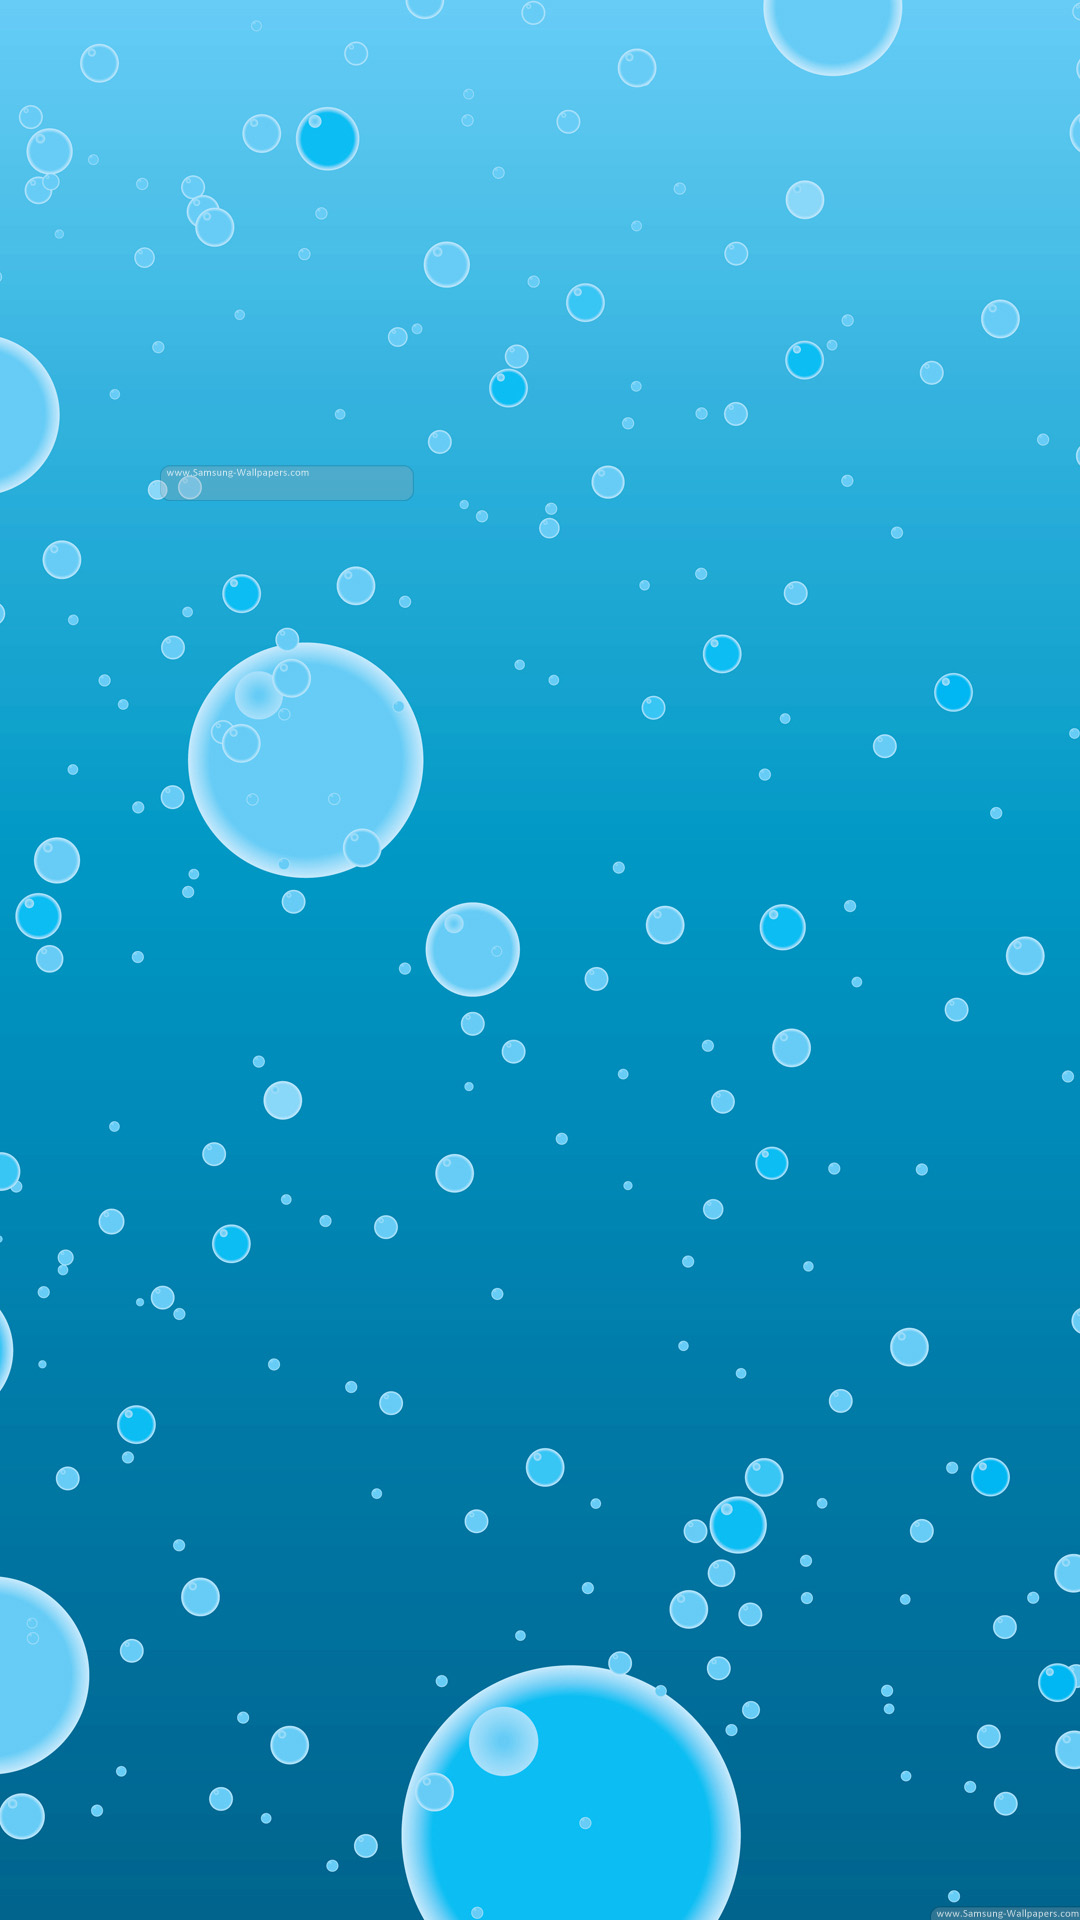 Water Bubbles Illustration iPhone 6 Plus HD Wallpaper iPod Wallpaper